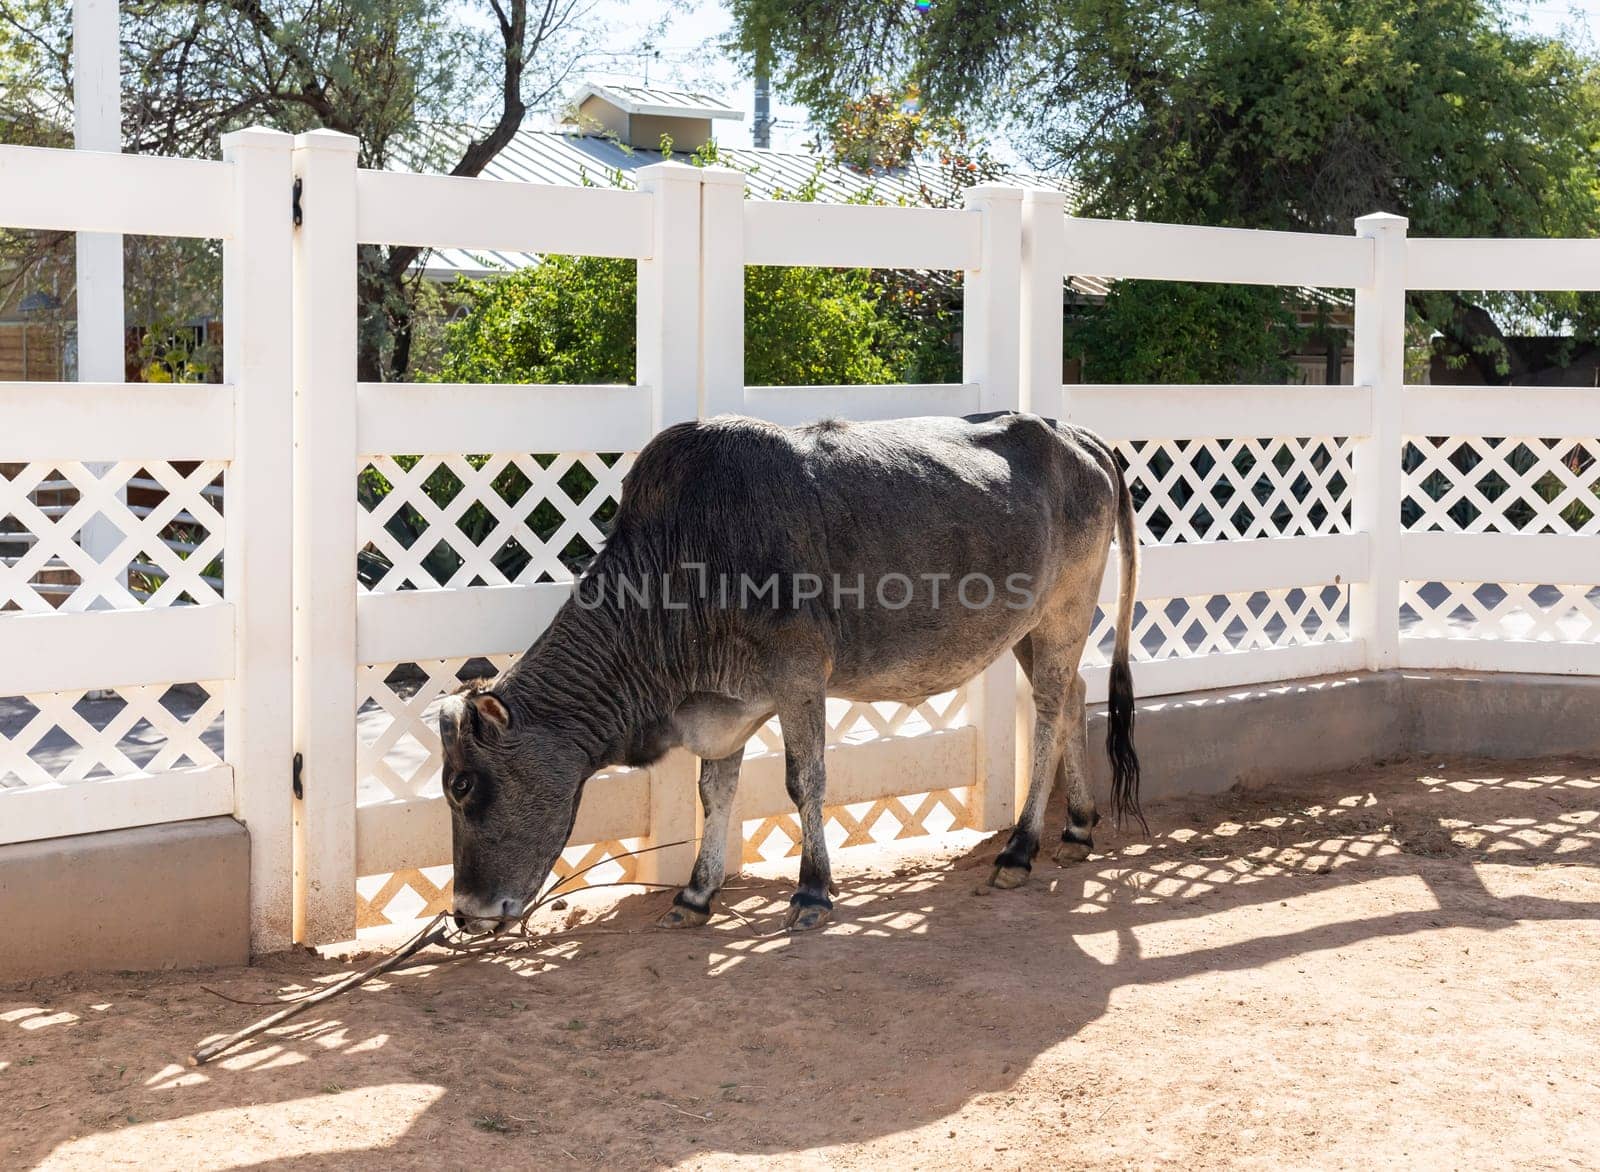 Miniature Zebu Cattle, Gray Cow In Backyard, Farm. Farming, Livestock. Indicine Cattle, Camel Cow Or Humped Cattle. Horizontal Plane. Domestic Animal near White Fence. by netatsi